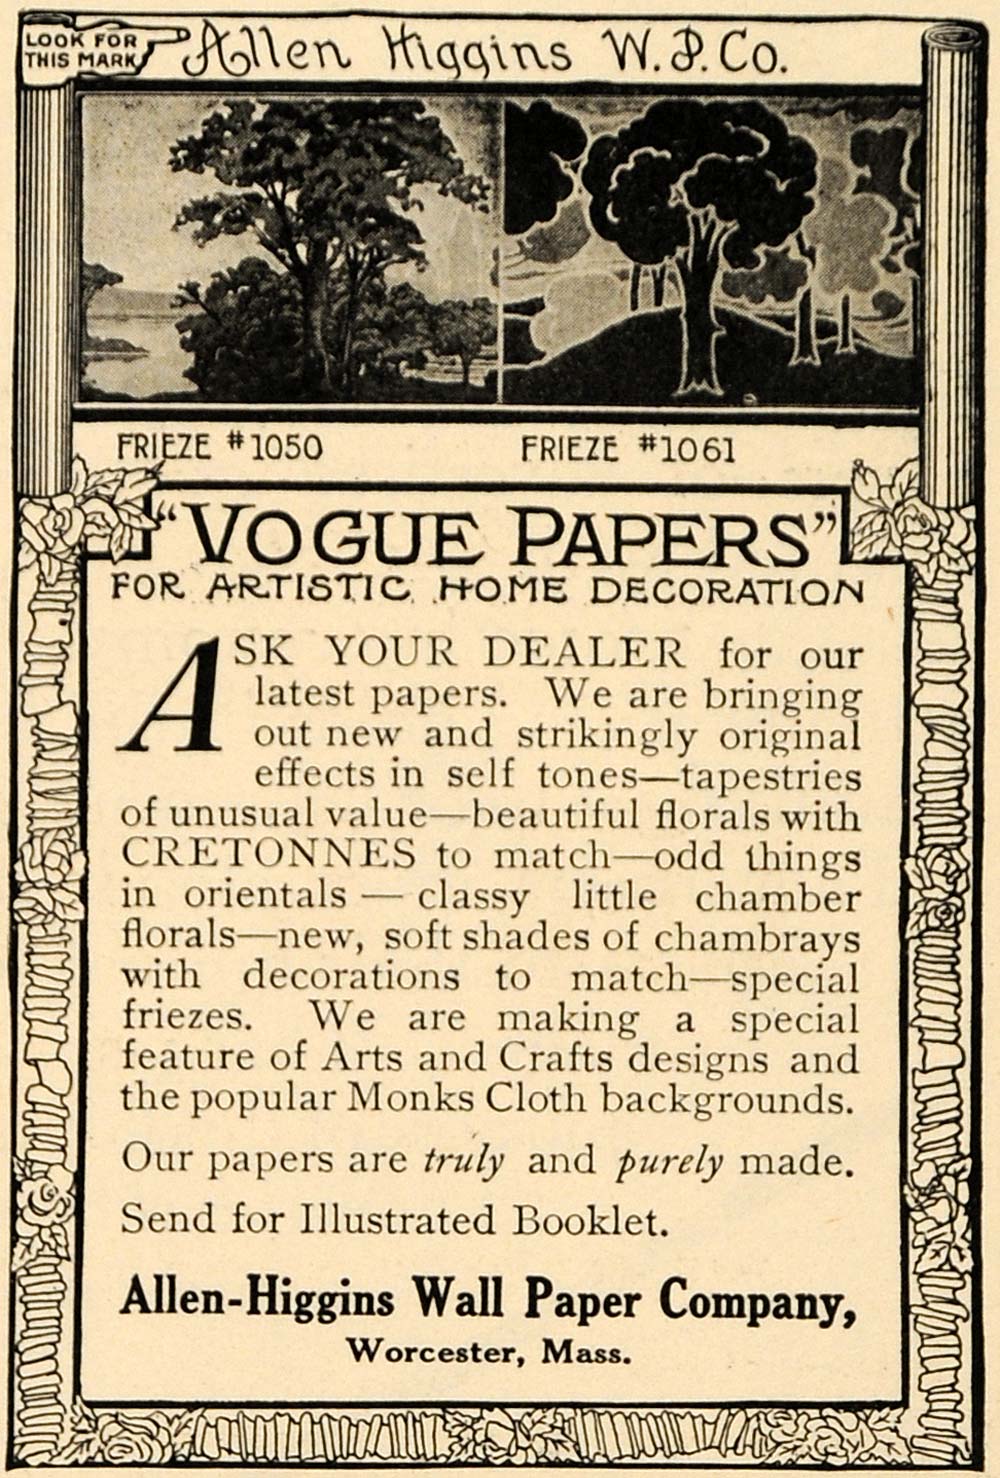 1909 Ad Allen-Higgins Wall Paper Co. Vogue Papers Decor - ORIGINAL GH3